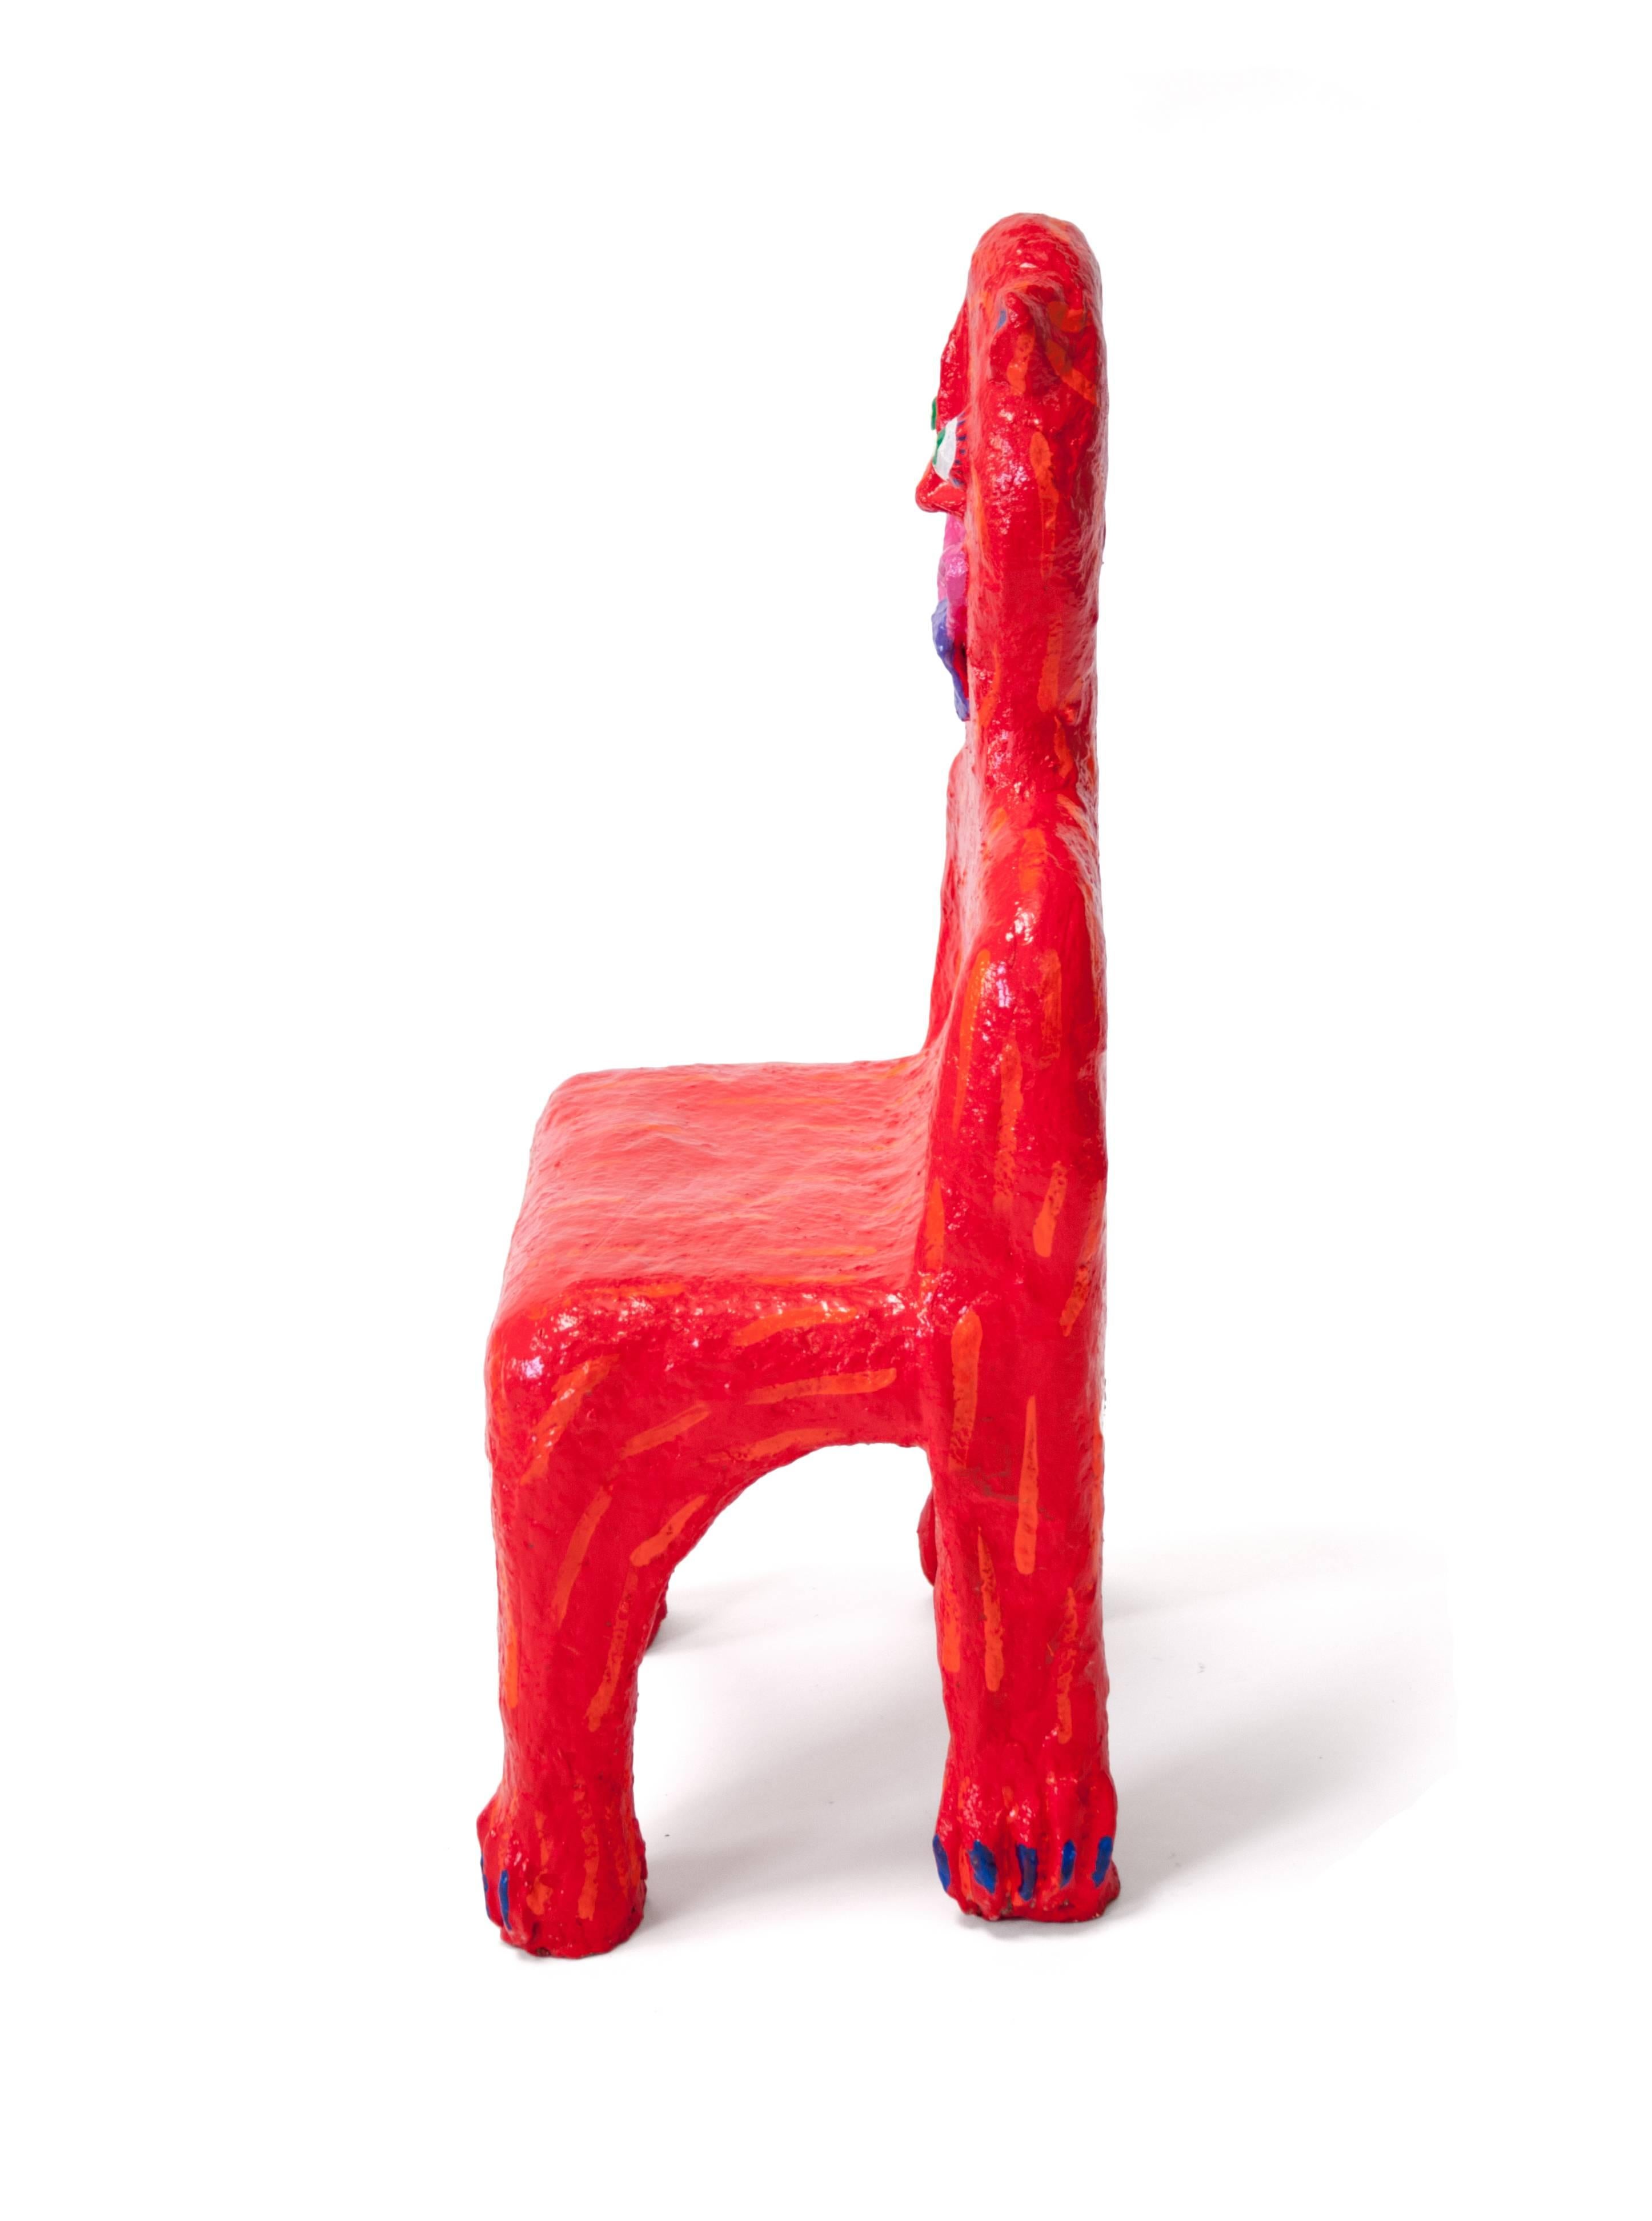 American Red Creature Child Chair by Brett Douglas Hunter, USA, 2018 For Sale